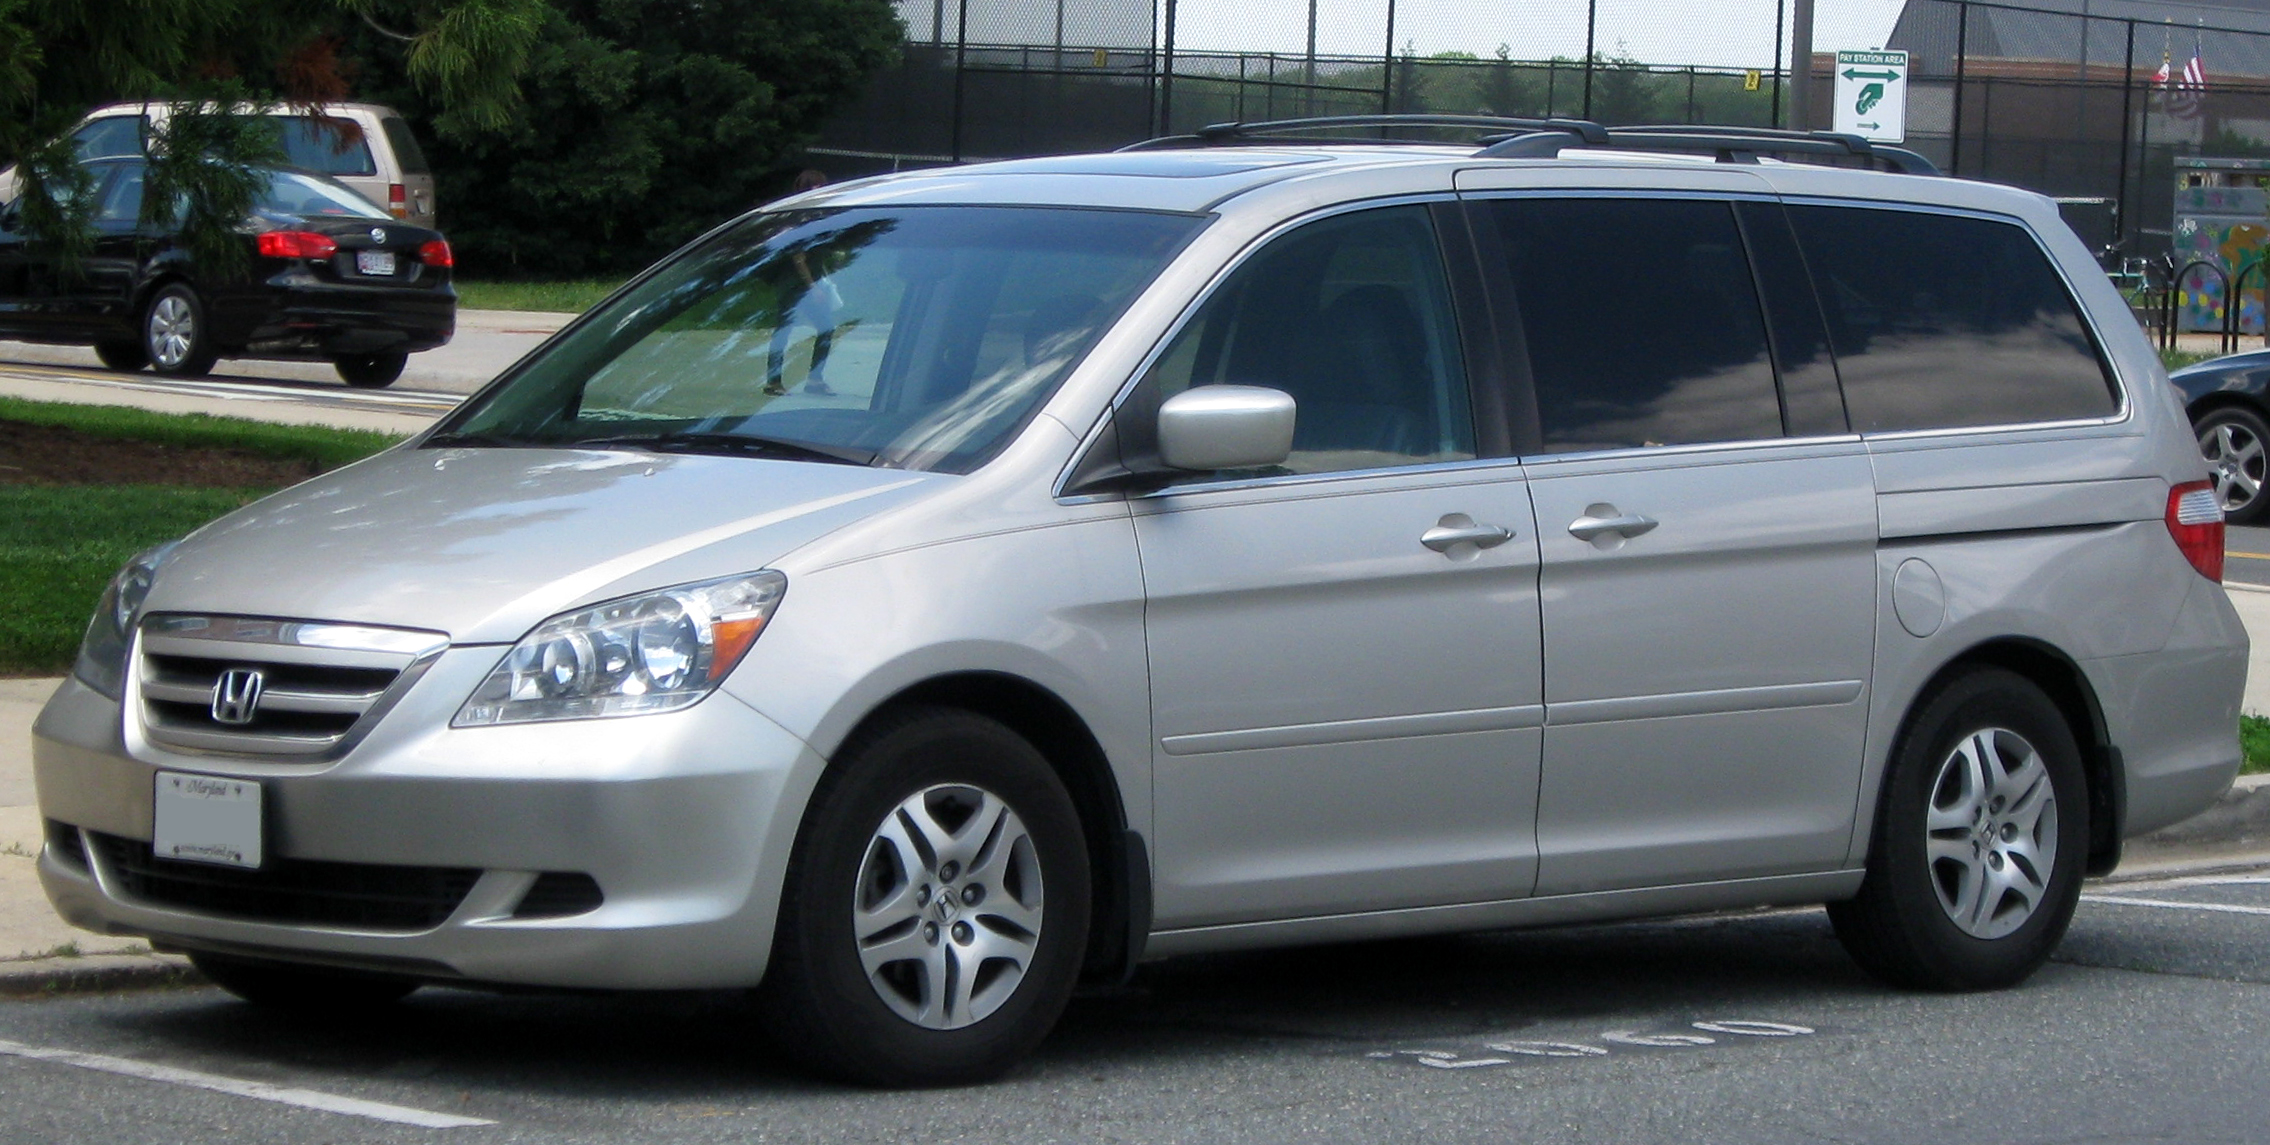 Honda Odyssey (North America) - Wikipedia